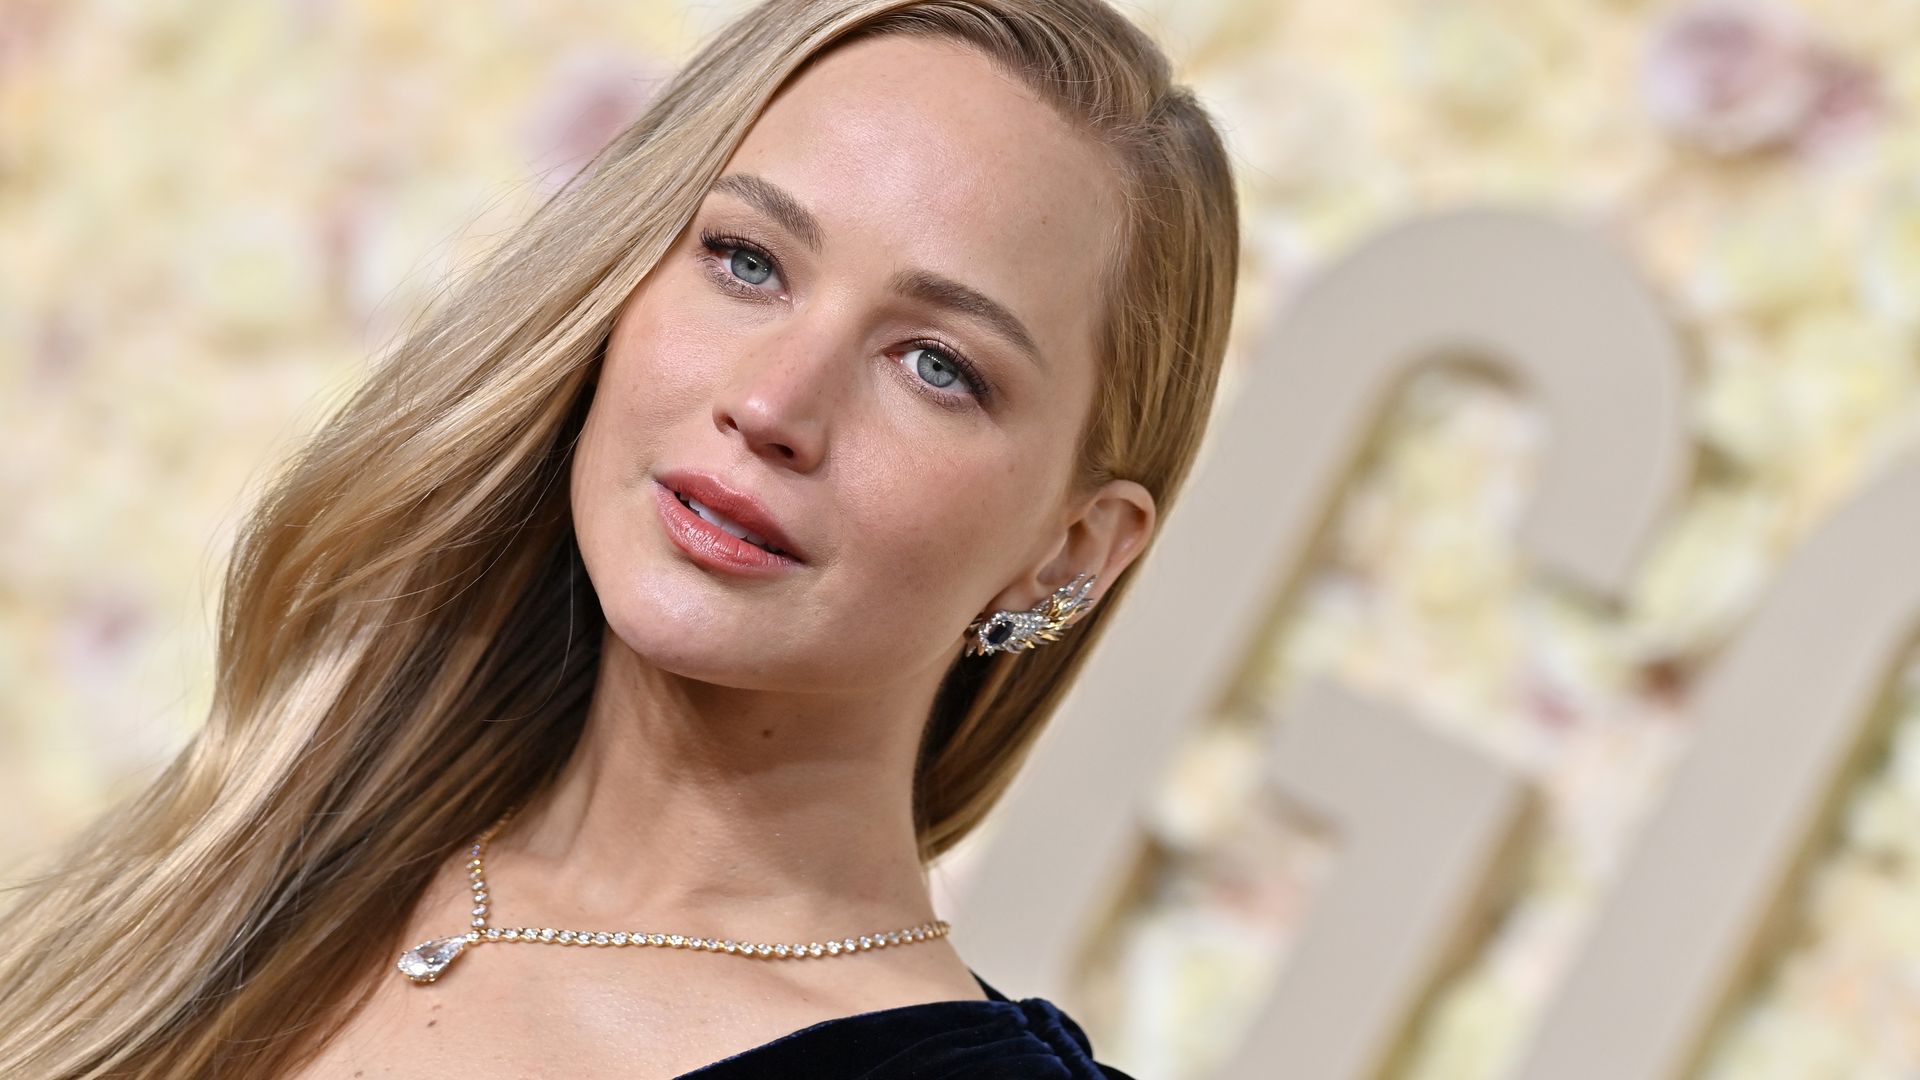 Jennifer Lawrence addresses fashion mishap at first Sundance - ‘That stood out’